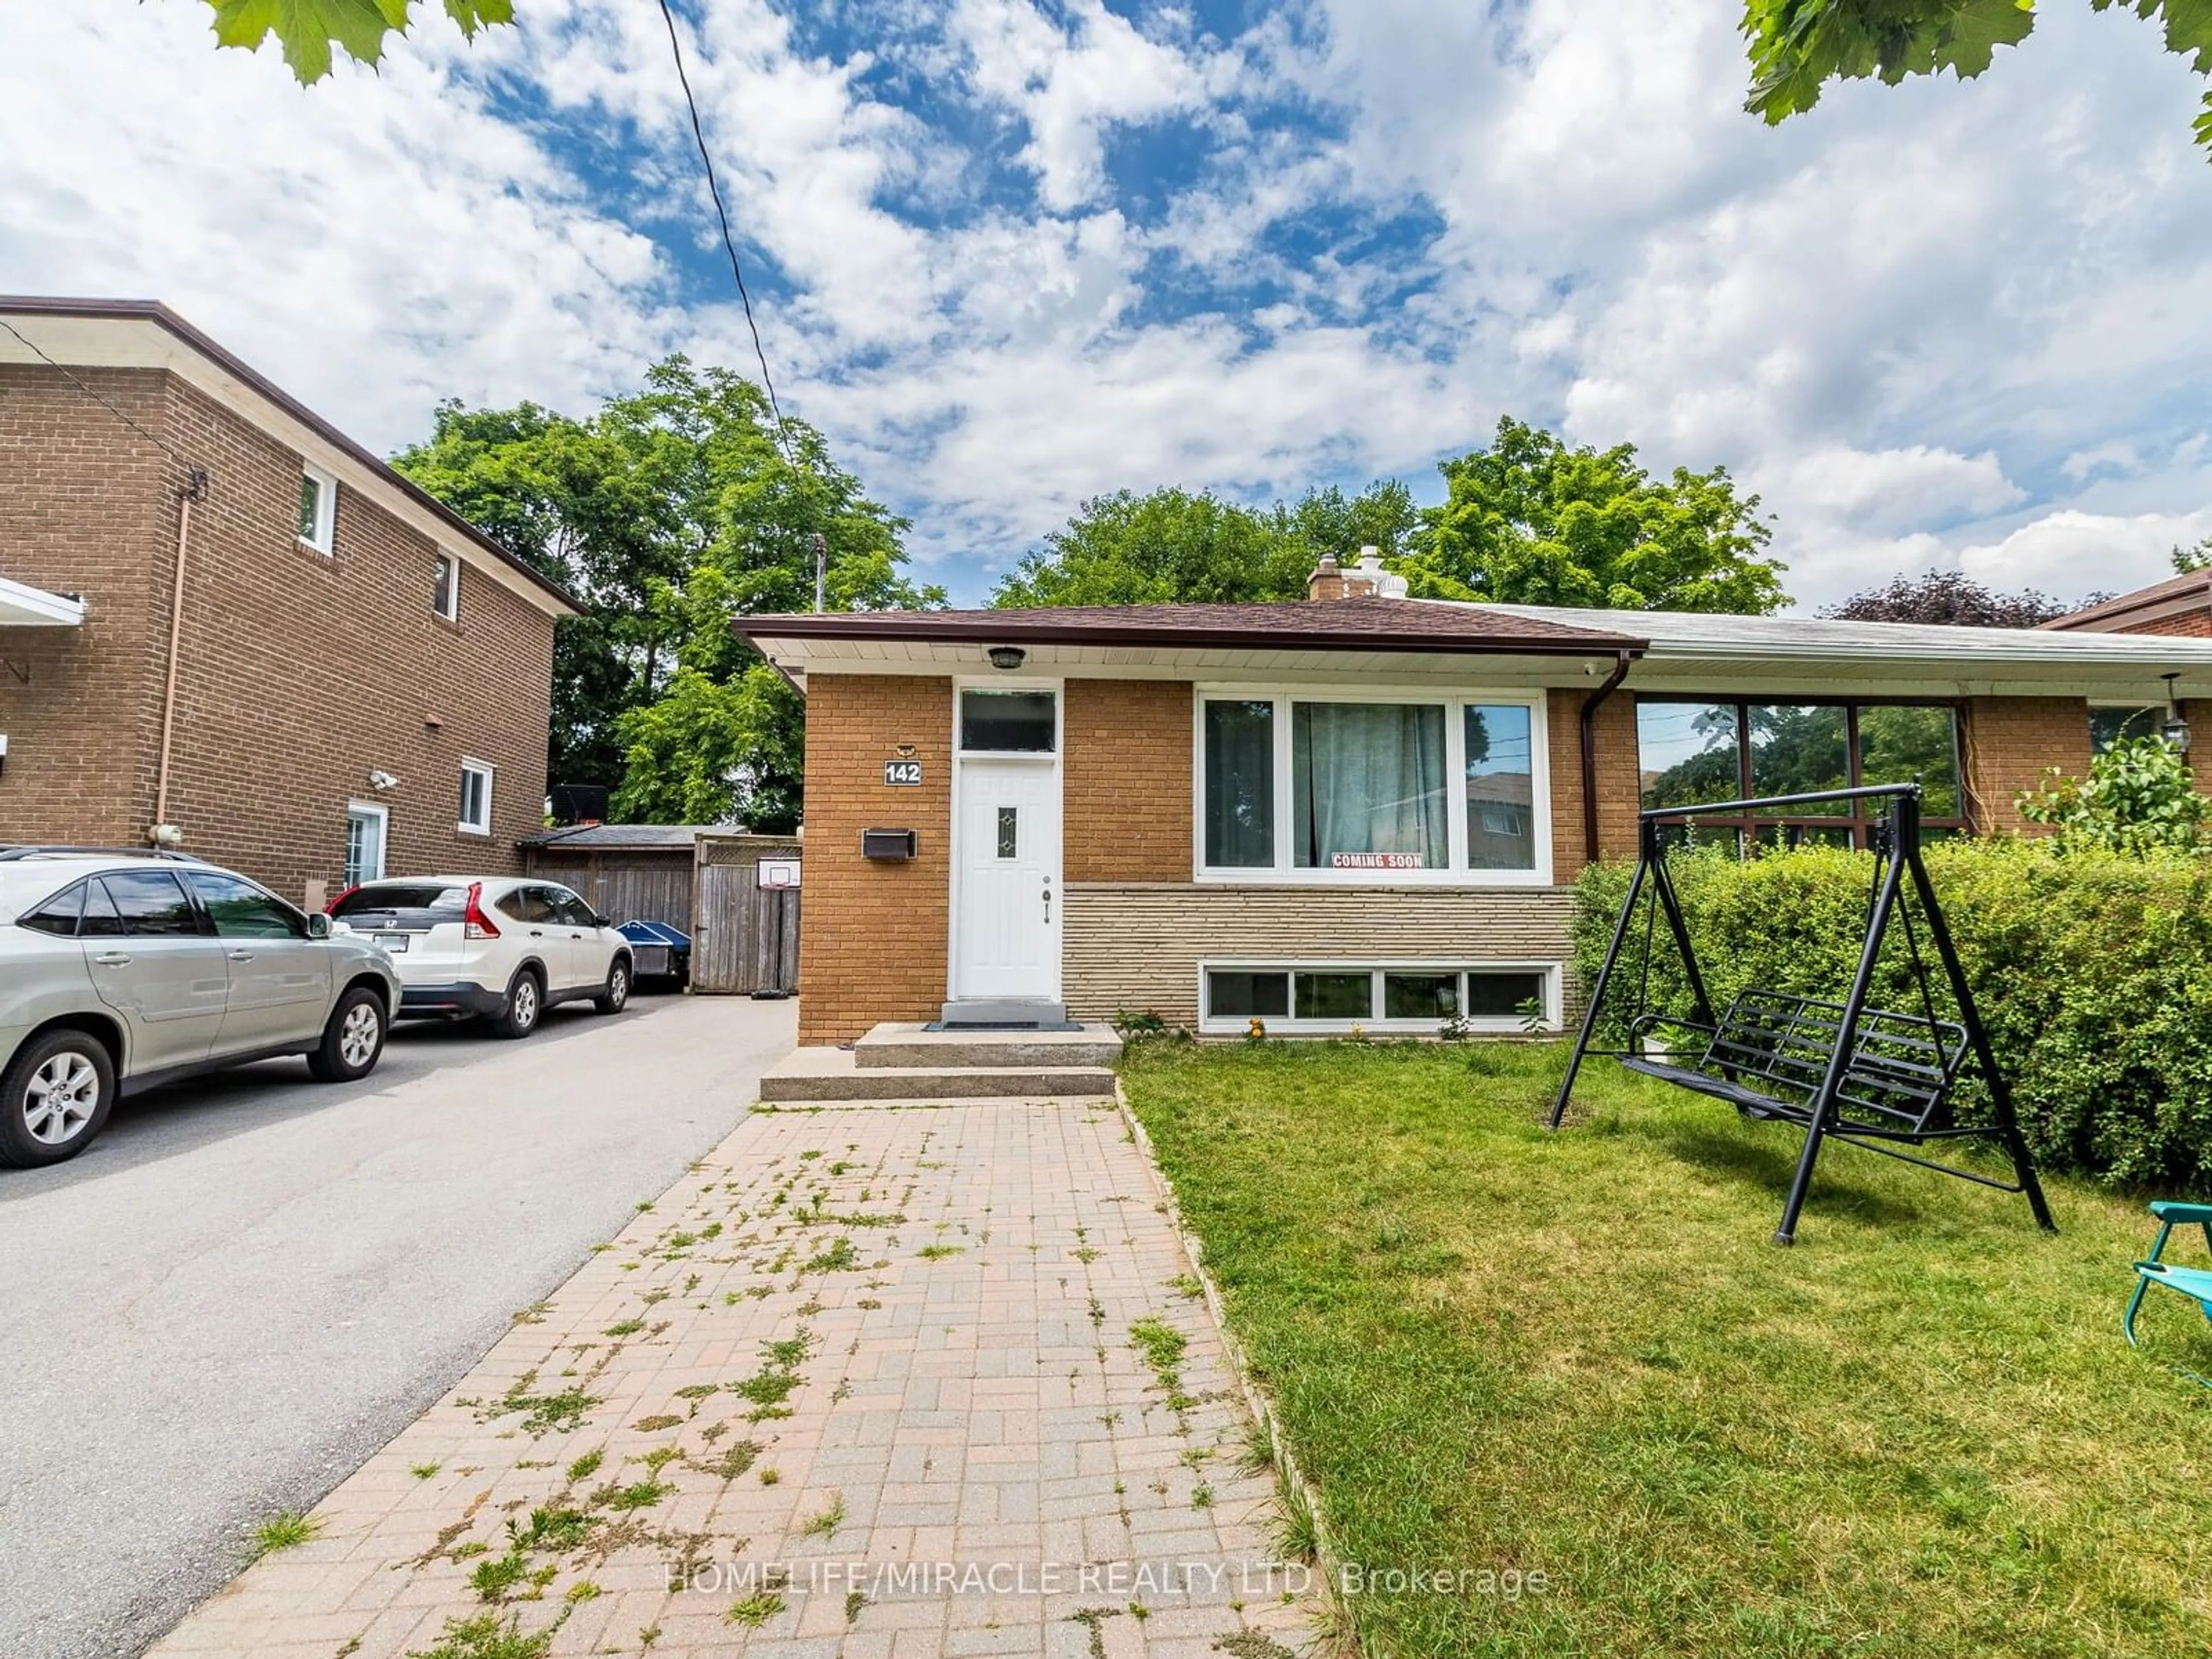 Frontside or backside of a home for 142 Rodda Blvd, Toronto Ontario M1E 2Z9